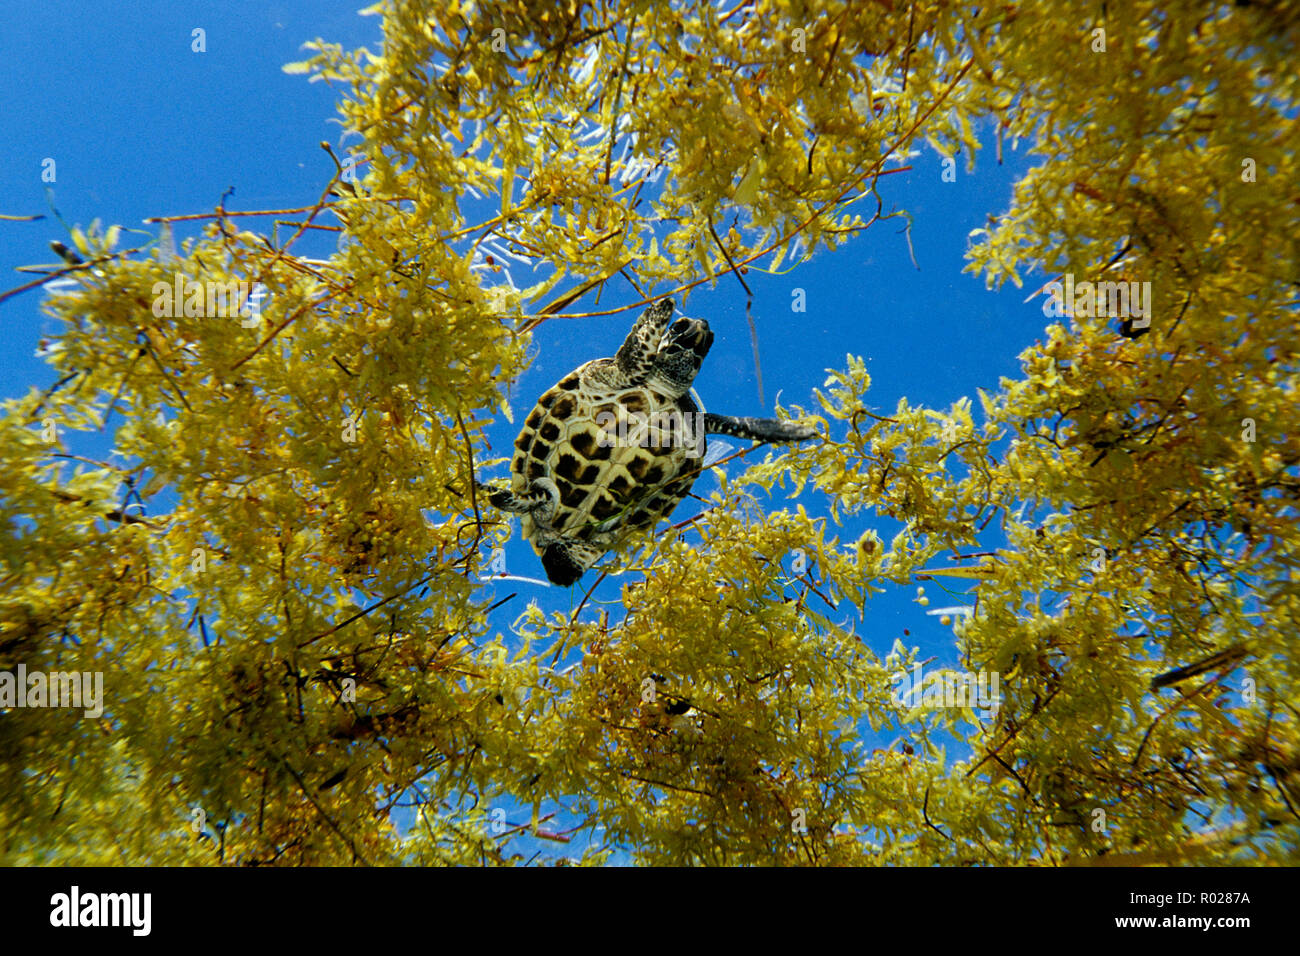 Hawksbill turtle in sargassum weed, Eretmochelys imbricata, Florida, Atlantic Ocean Stock Photo